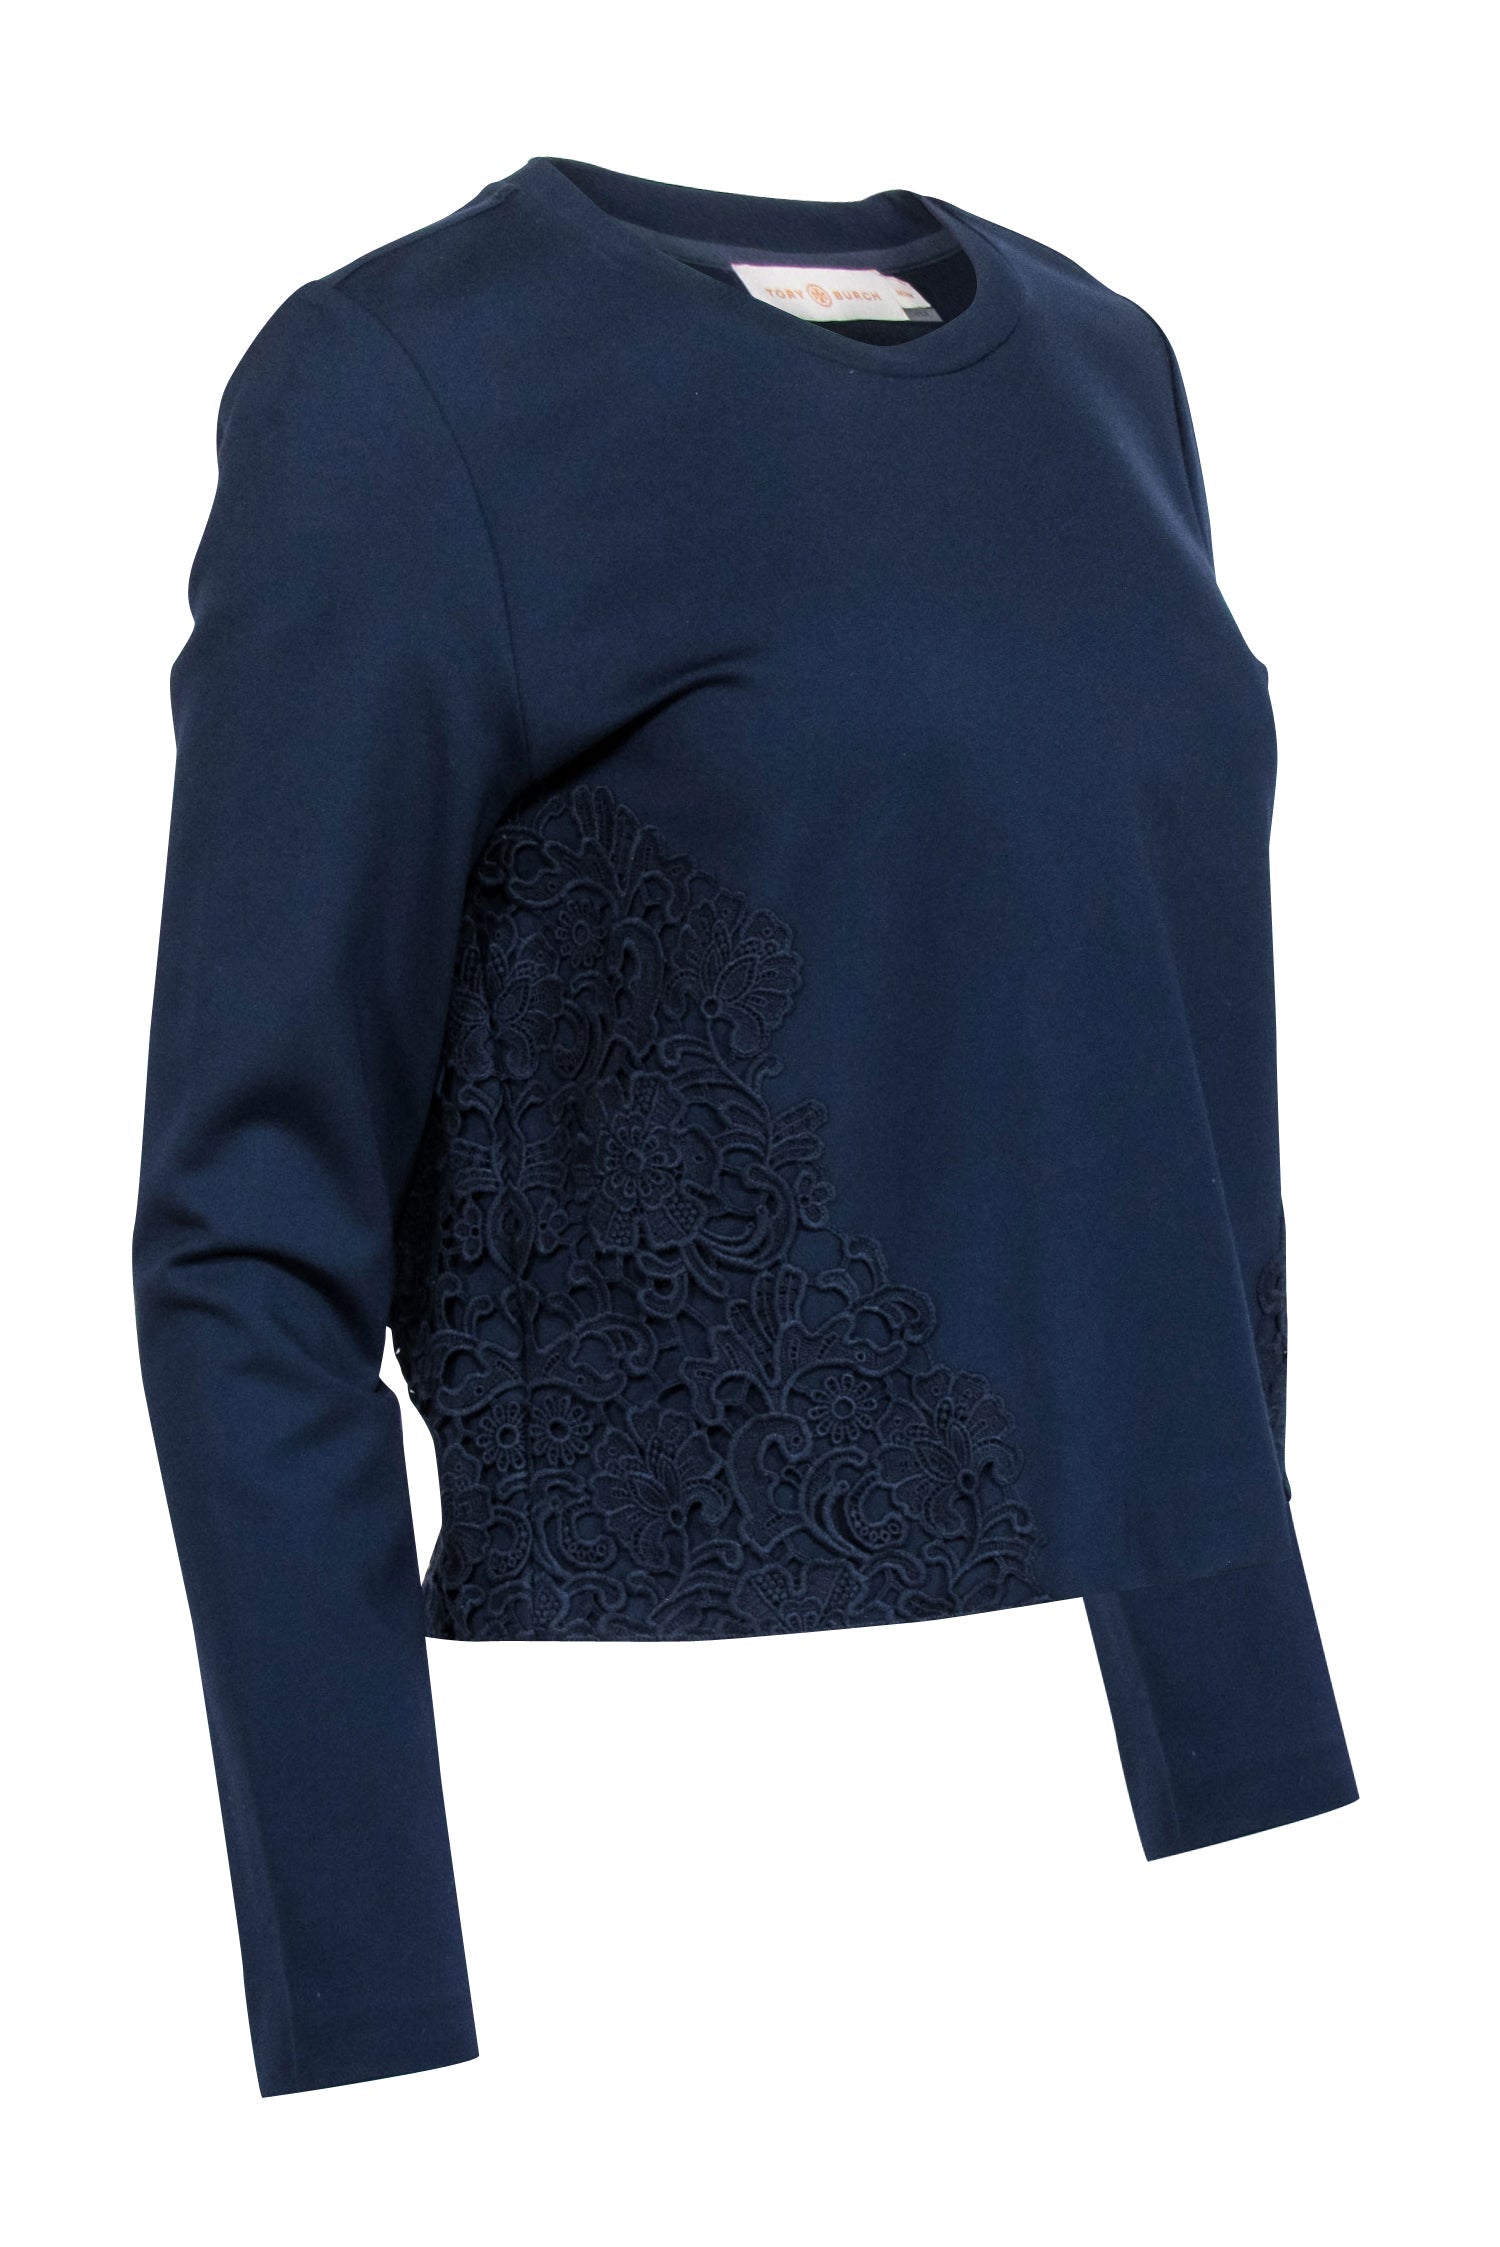 Tory Burch - Navy Cropped Sweatshirt w/ Floral Lace Applique Sz M